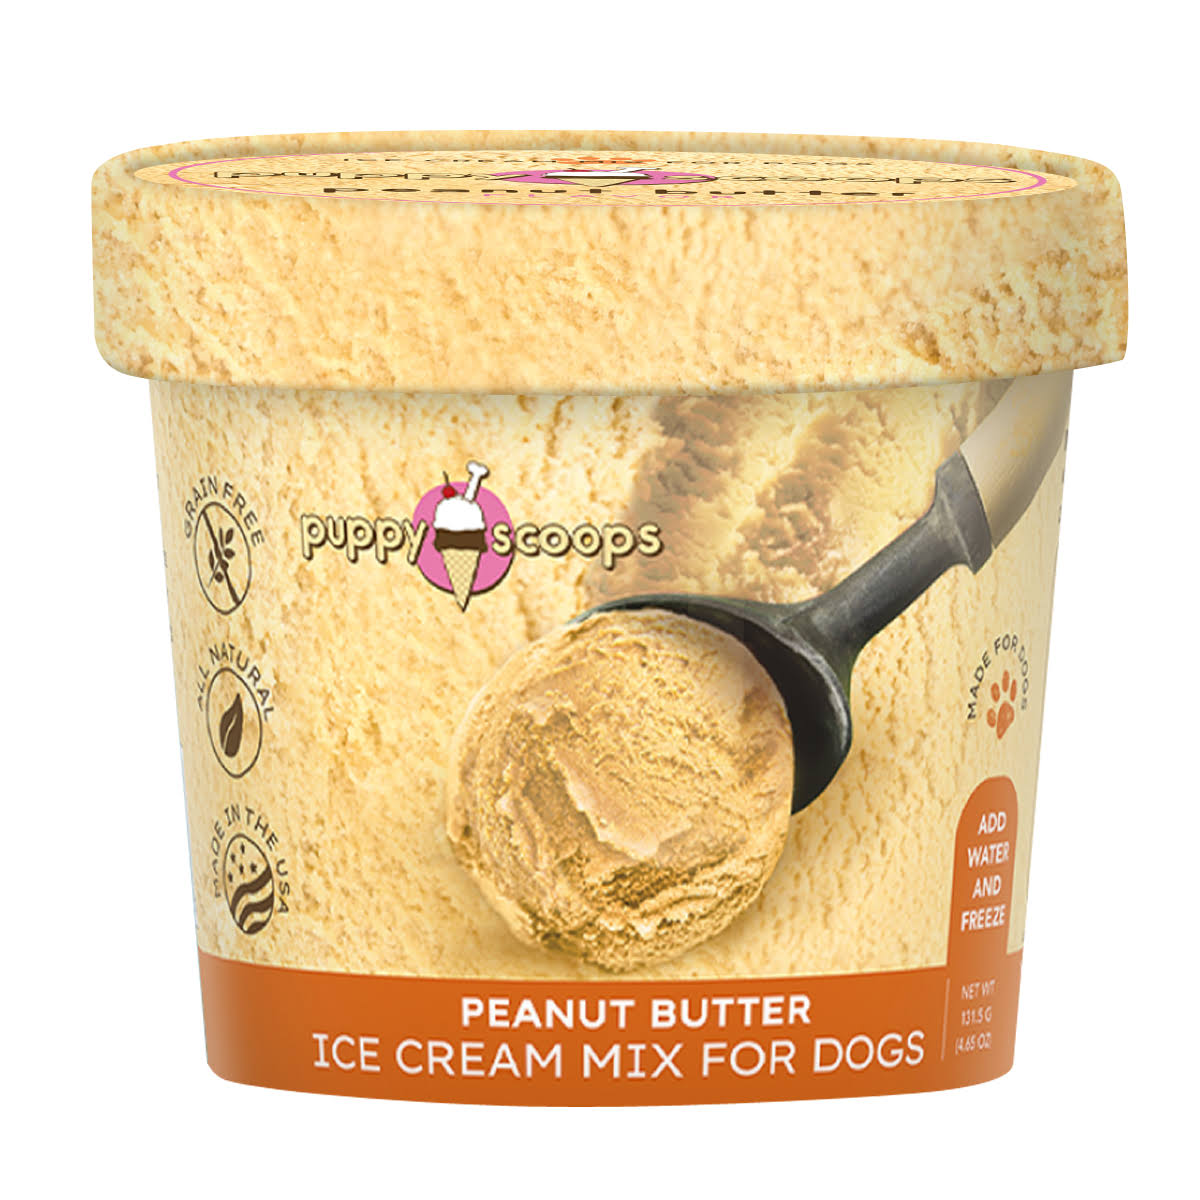 Puppy Cake Scoops Ice Cream Mix Peanut Butter - 2.32oz